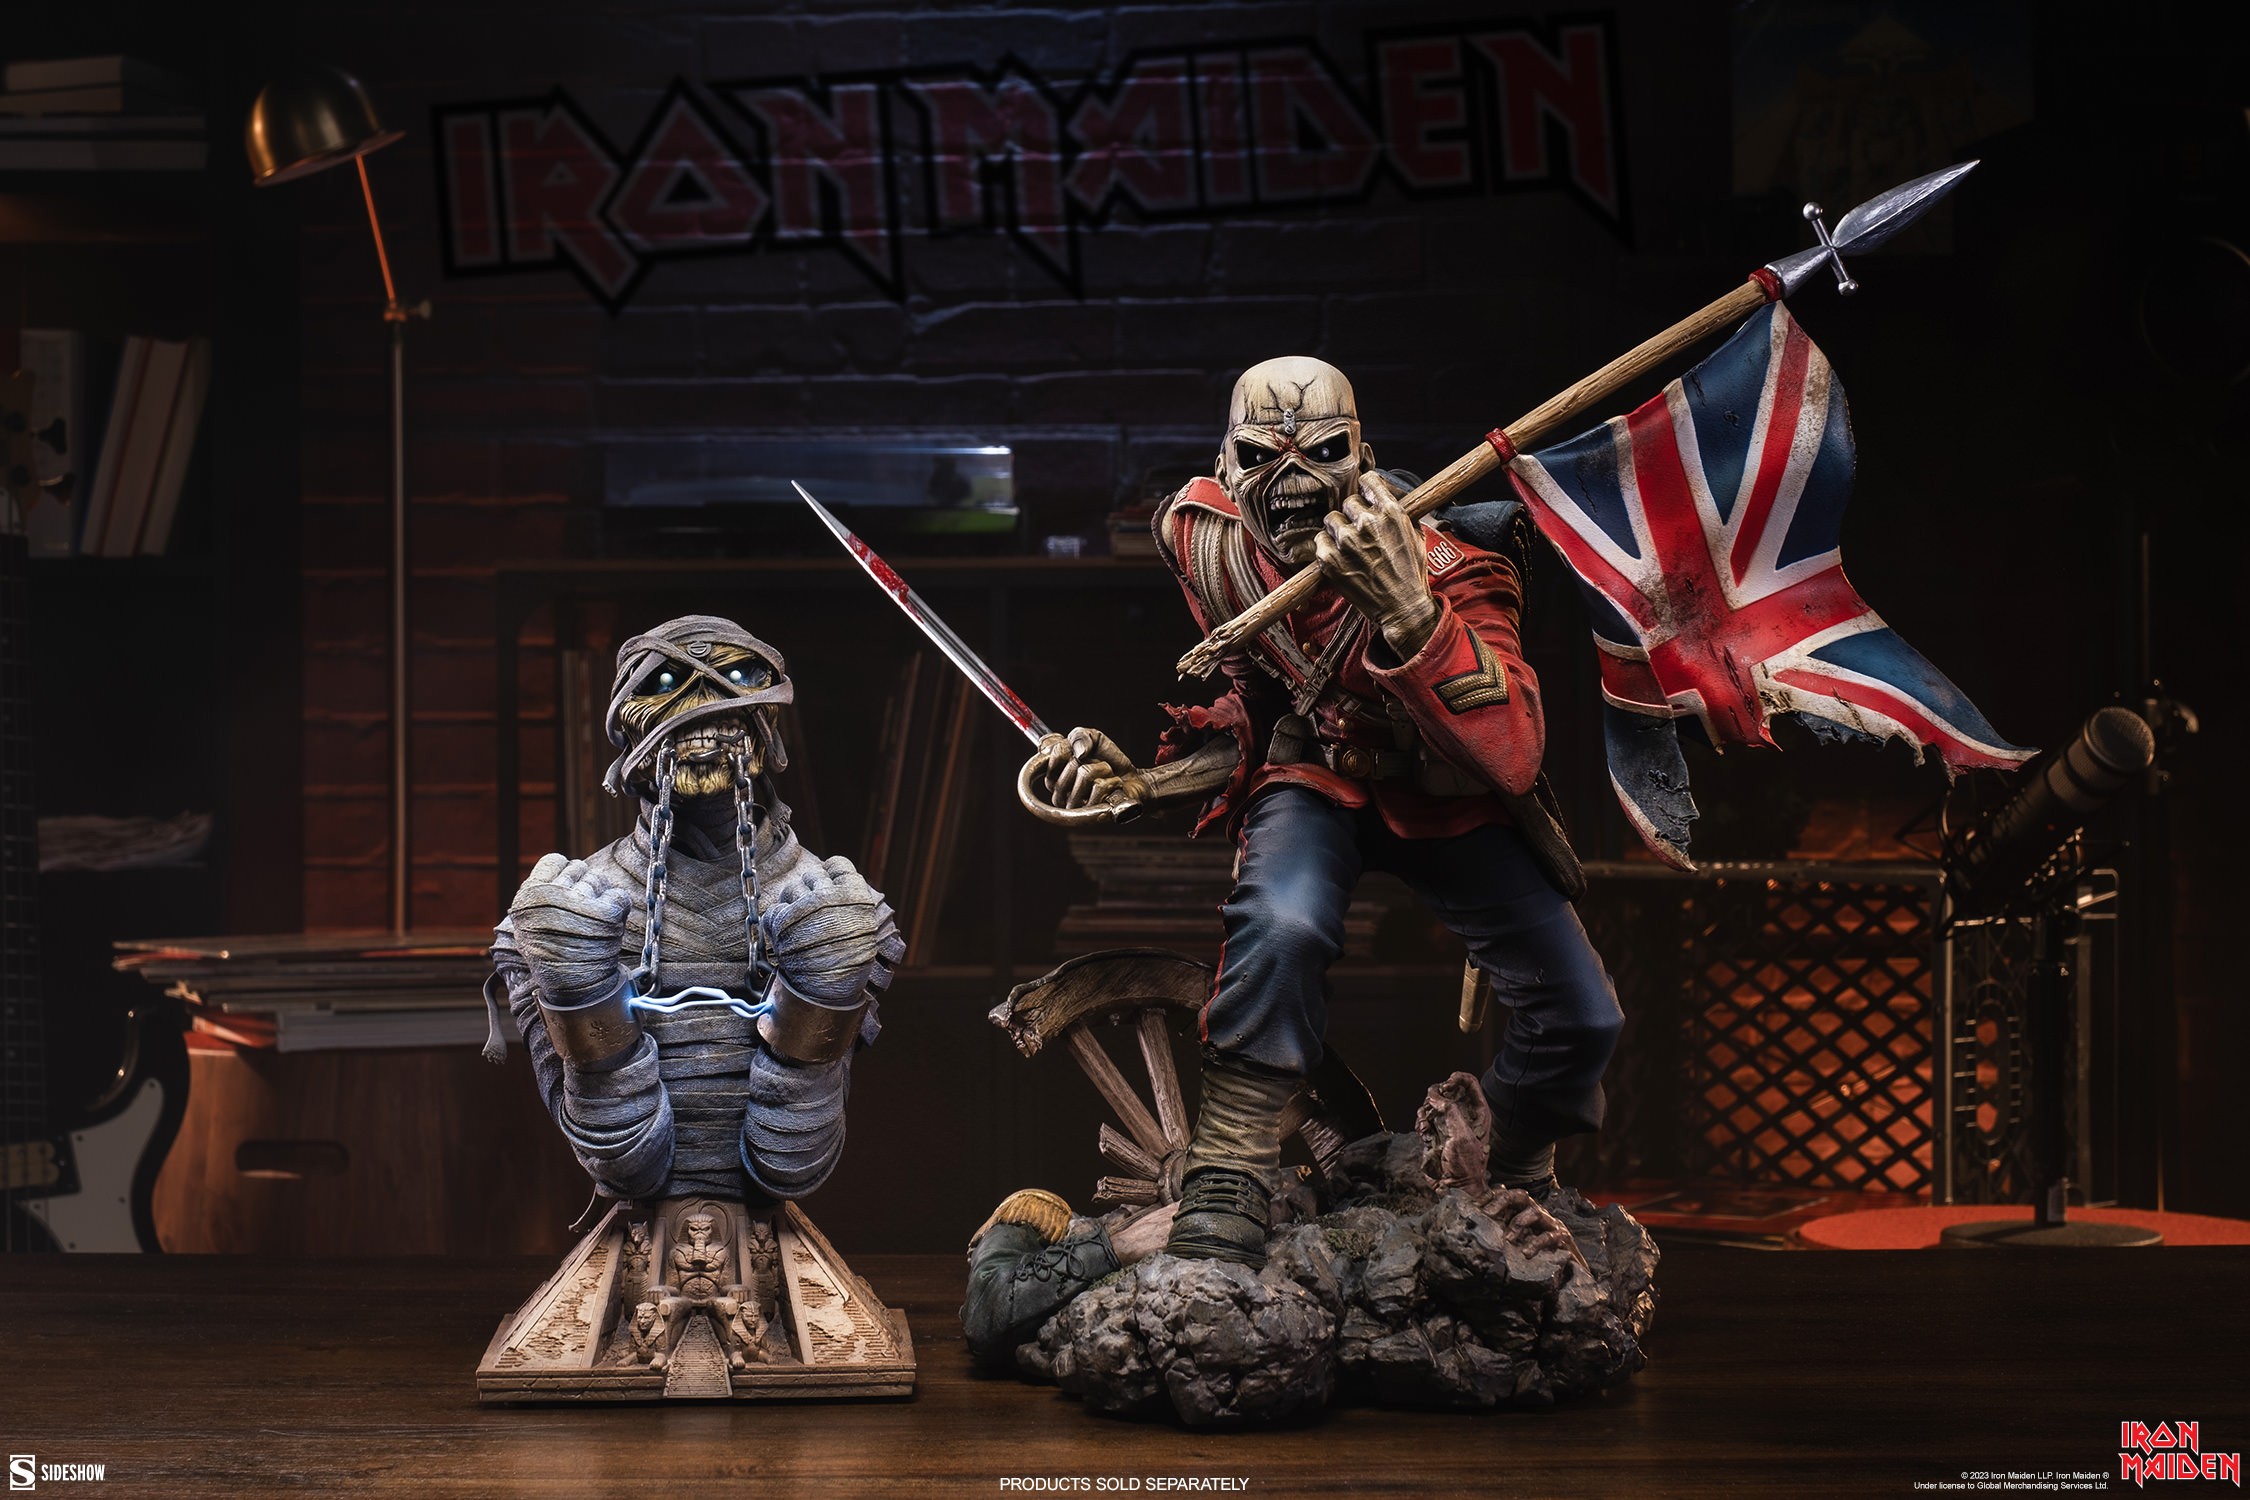 Iron Maiden: The Trooper Eddie (Prototype Shown) View 5